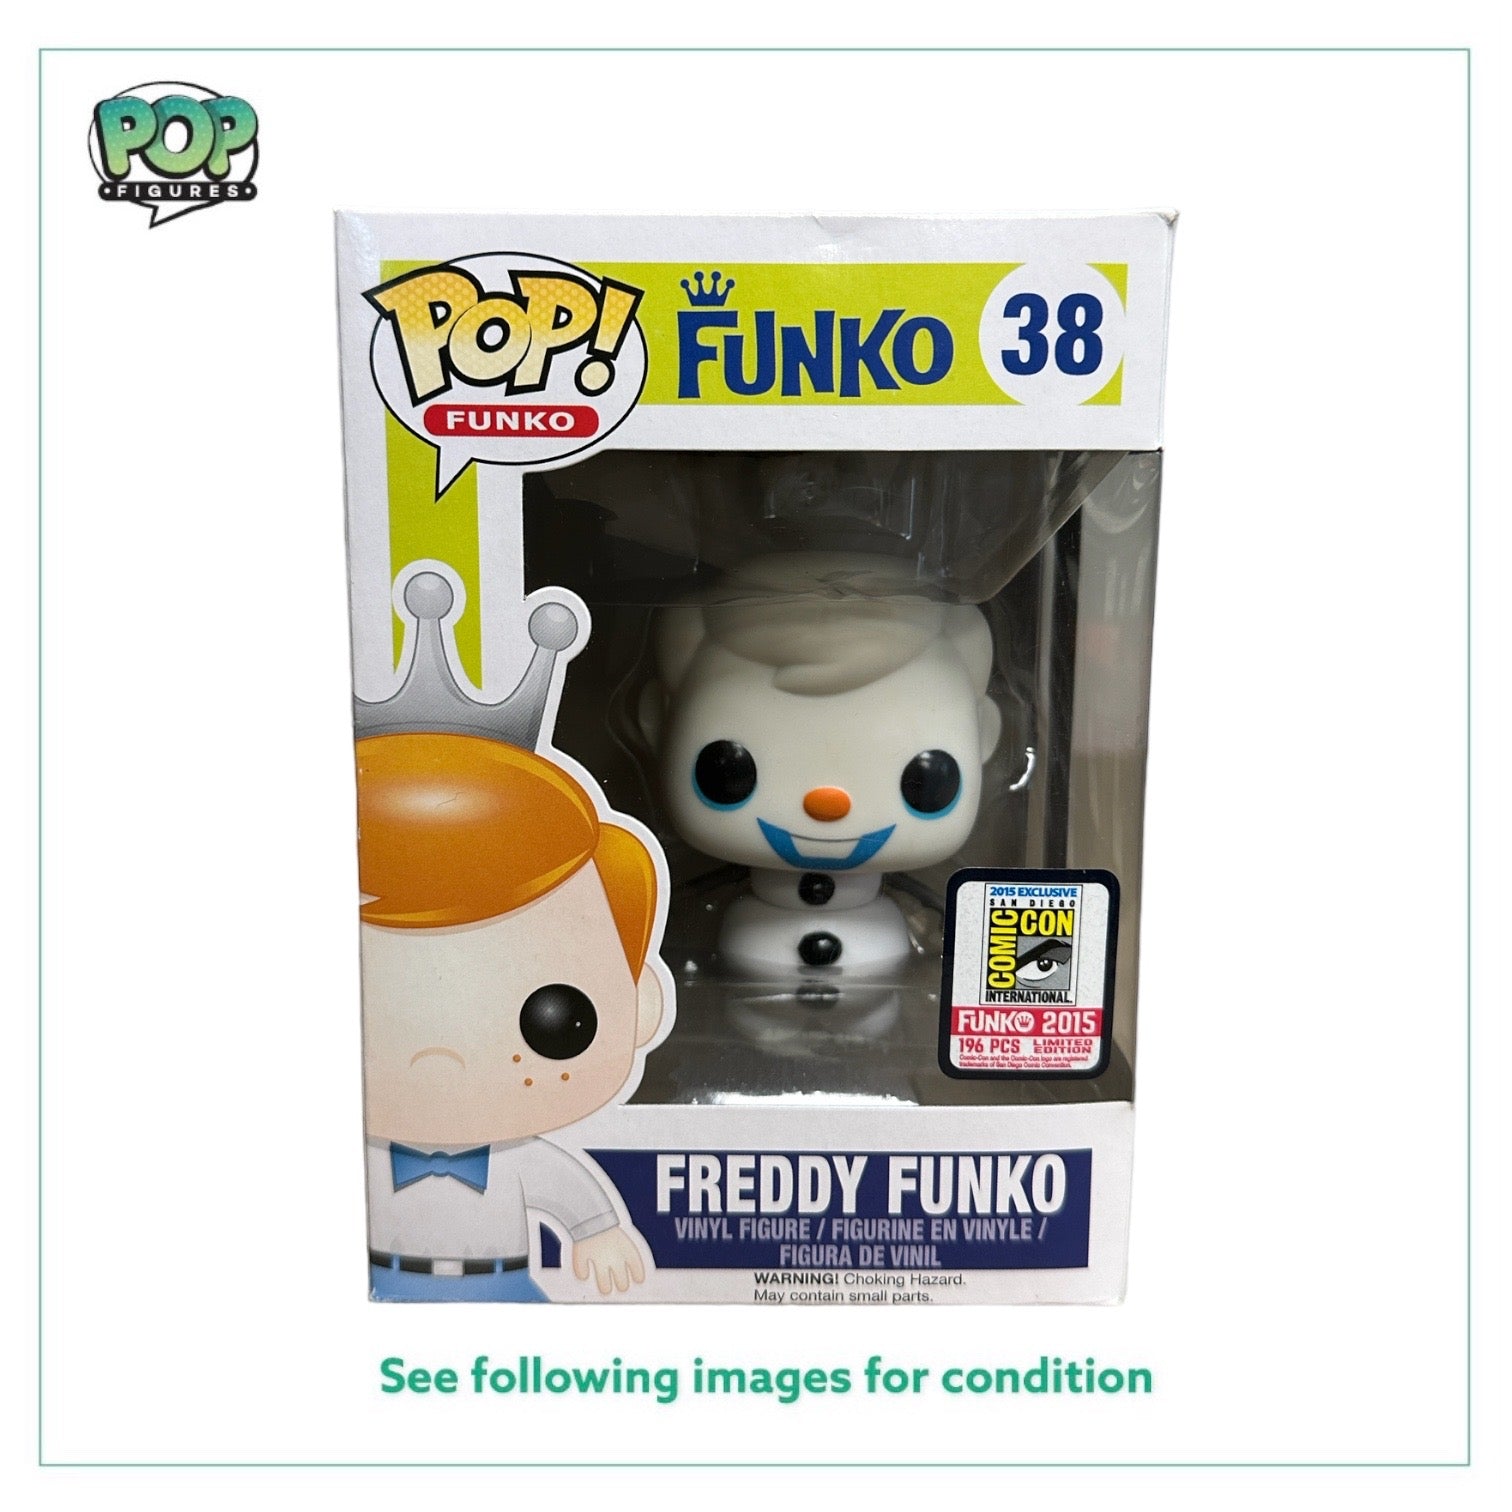 Freddy Funko as Olaf #38 Funko Pop! - SDCC 2015 Exclusive LE196 Pcs - Condition 7/10